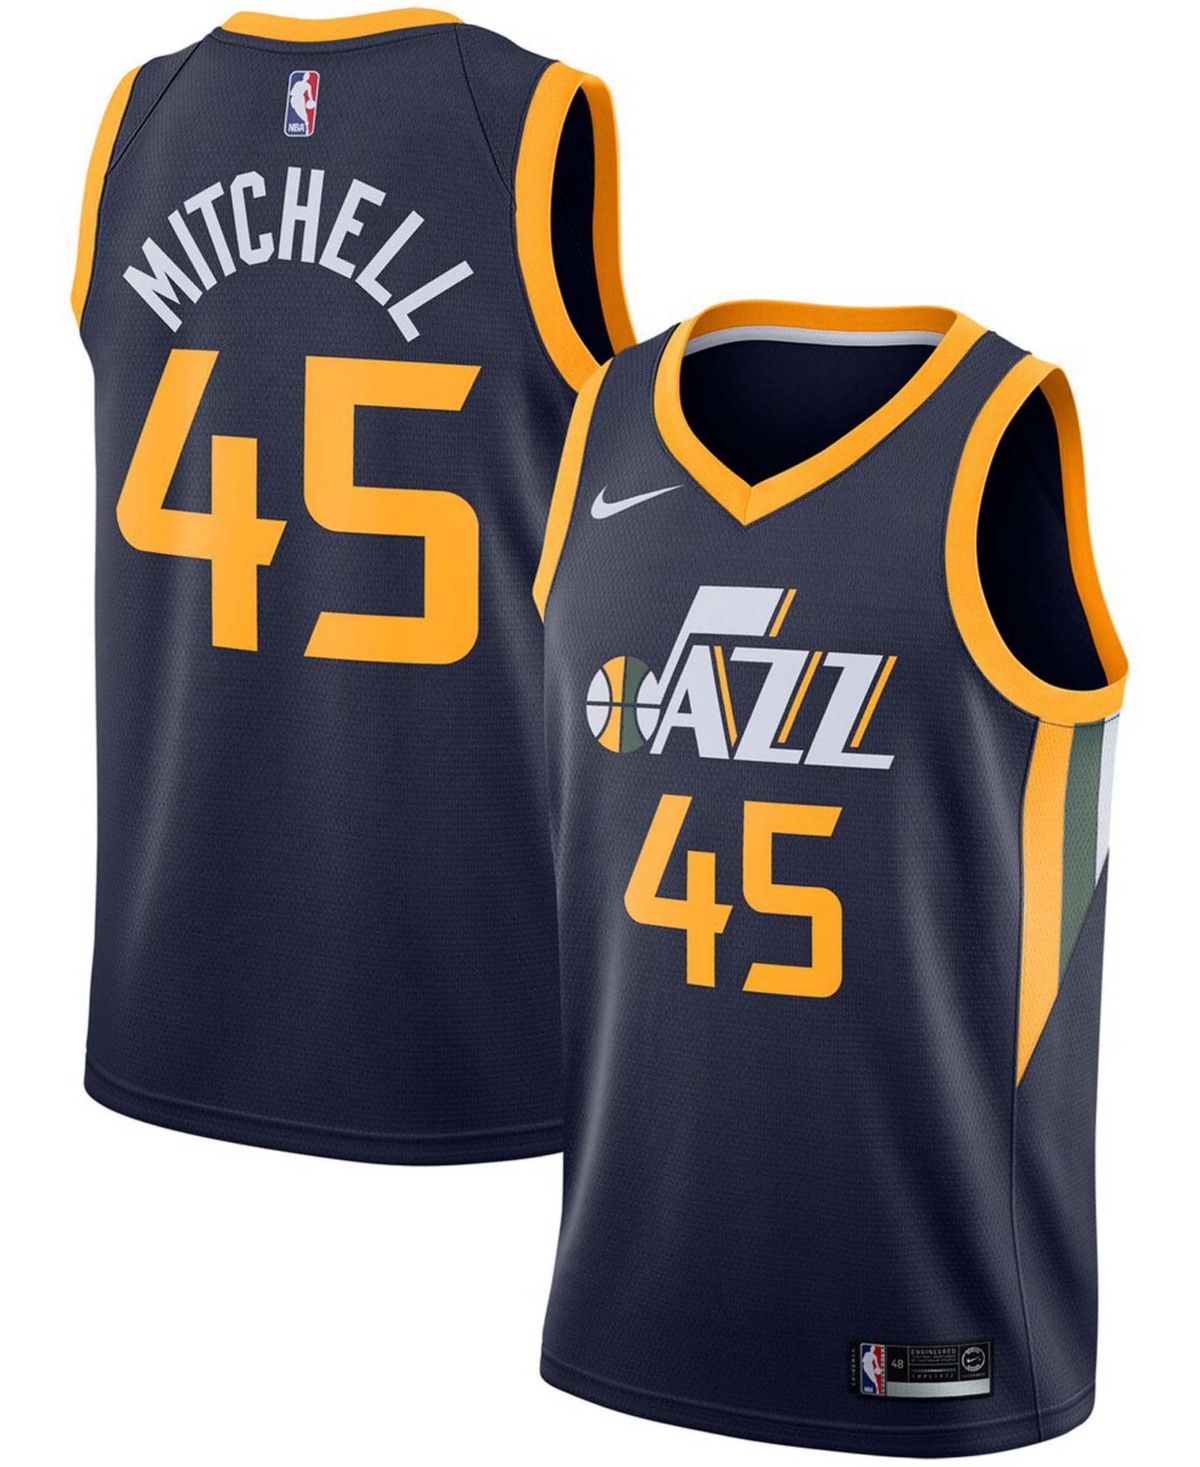 Nike Men's Donovan Mitchell Utah Jazz Replica Swingman Jersey